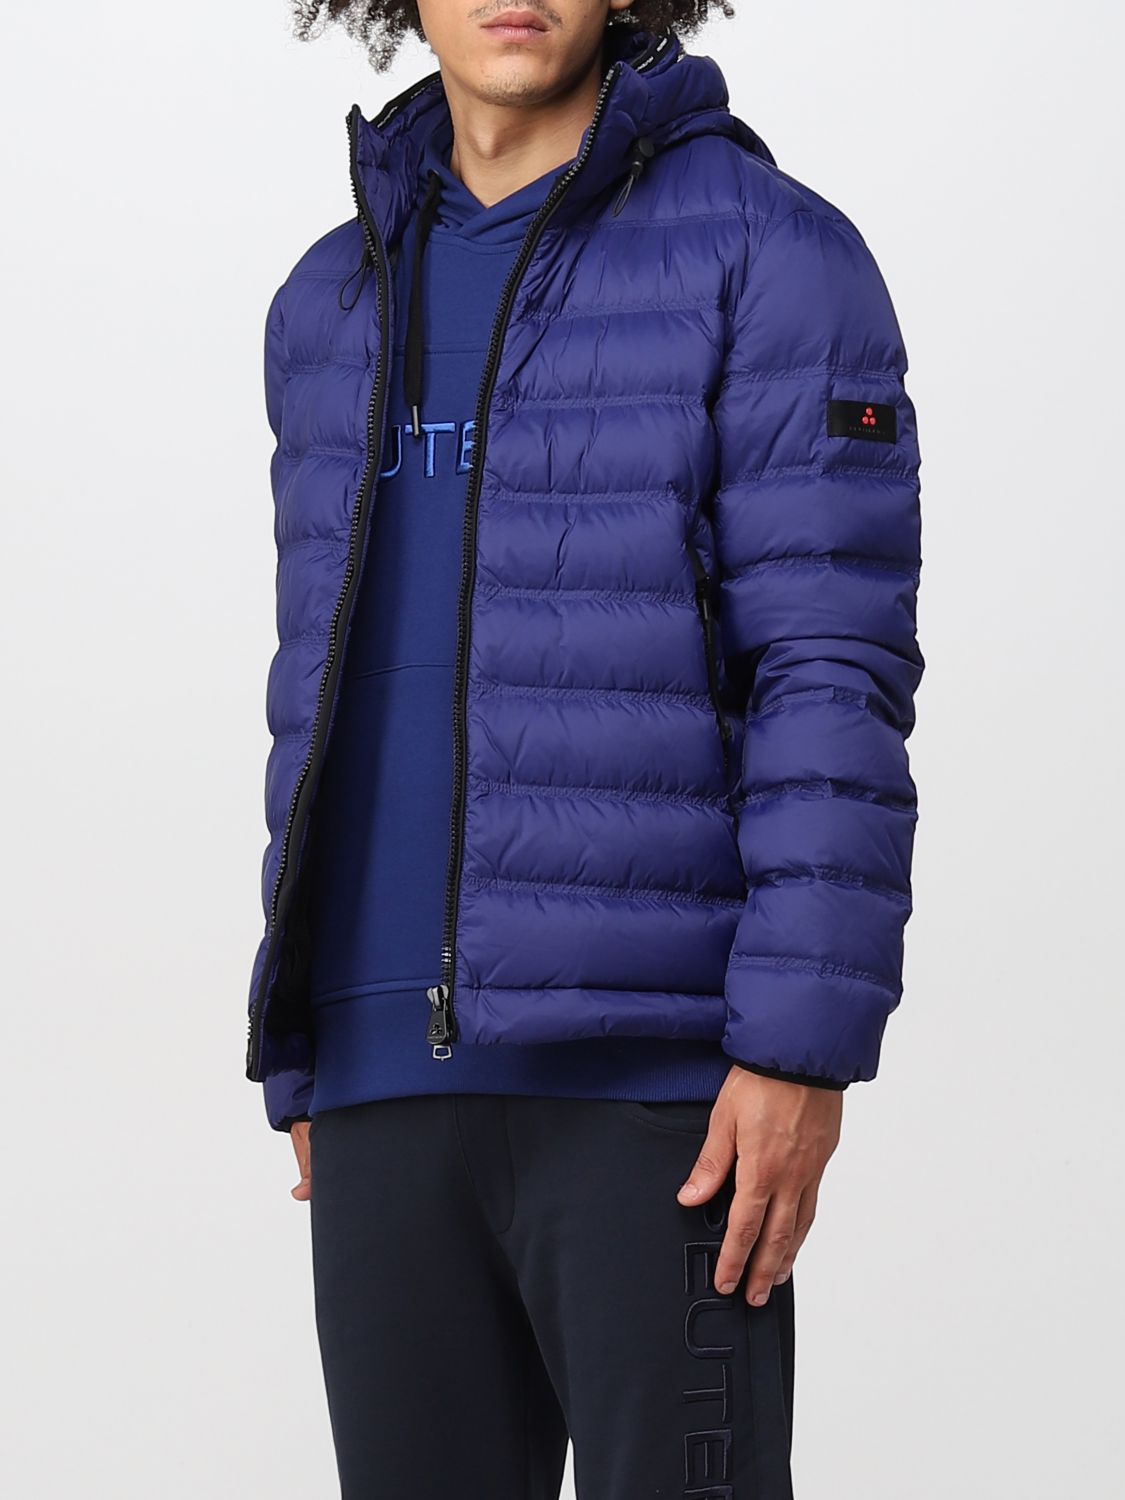 Verwaand Levering vingerafdruk Peuterey Outlet: jacket for man - Blue 1 | Peuterey jacket PEU325701181503  online on GIGLIO.COM